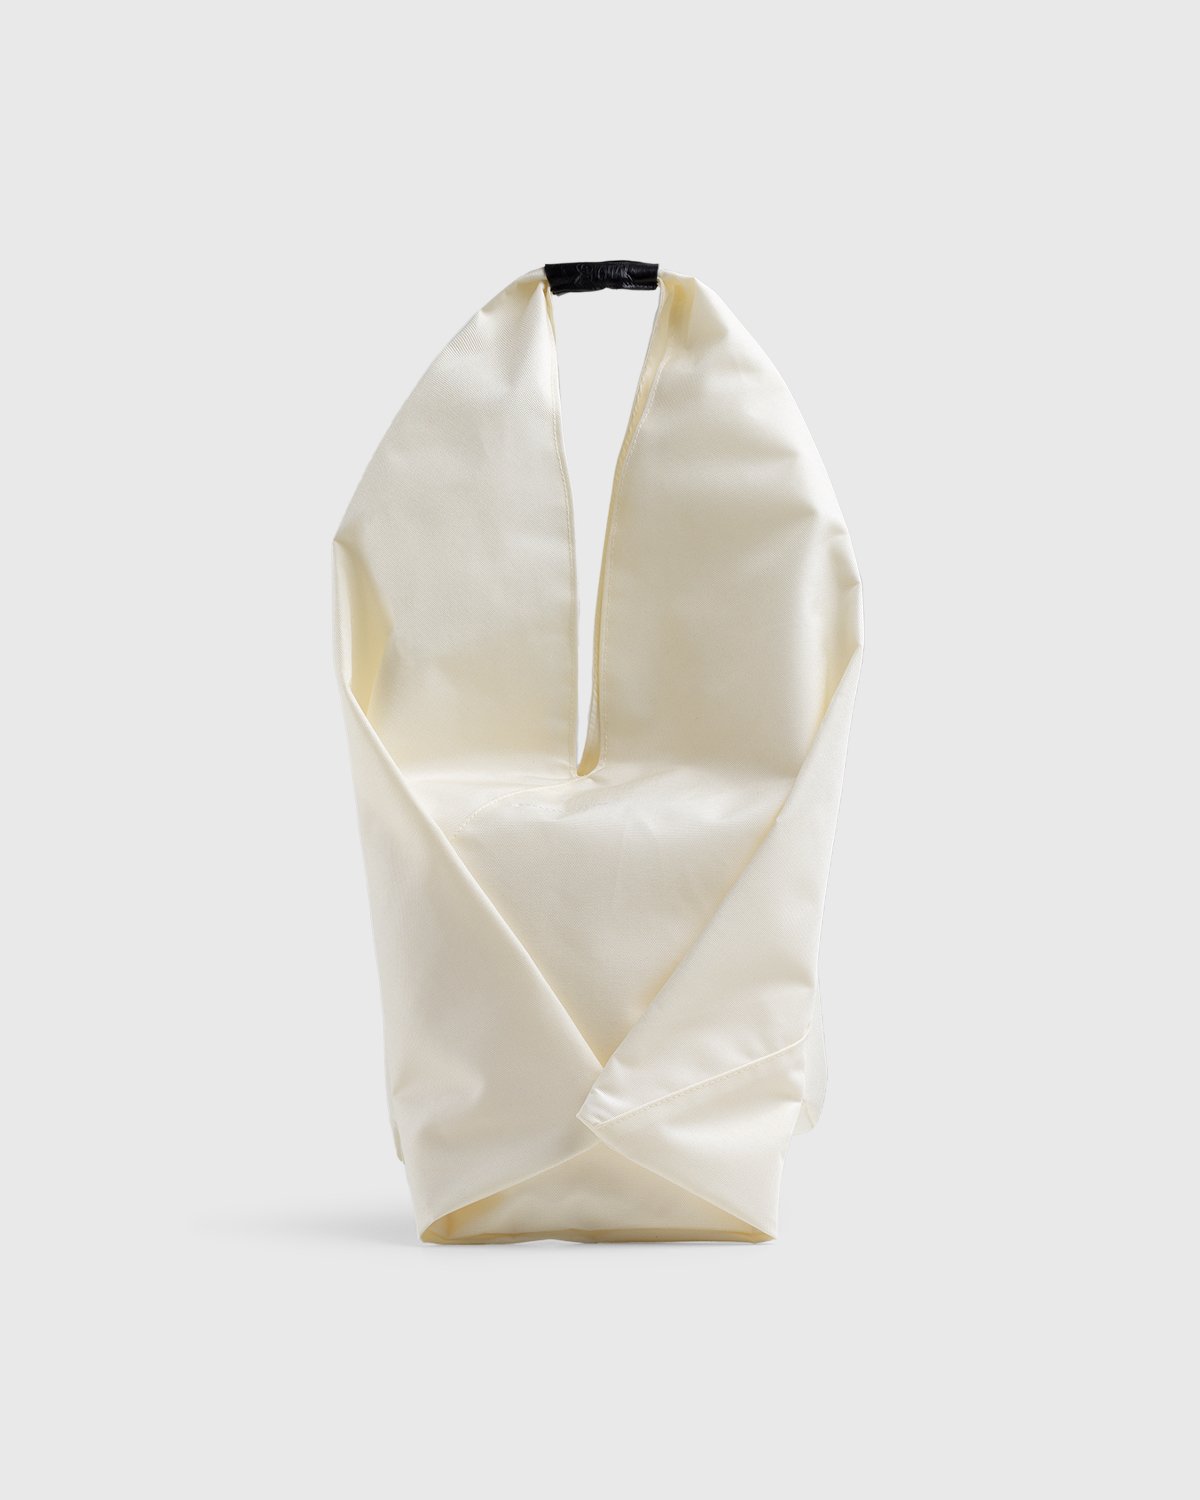 MM6 Maison Margiela x Eastpak - Borsa Shopping Bag White - Accessories - White - Image 3